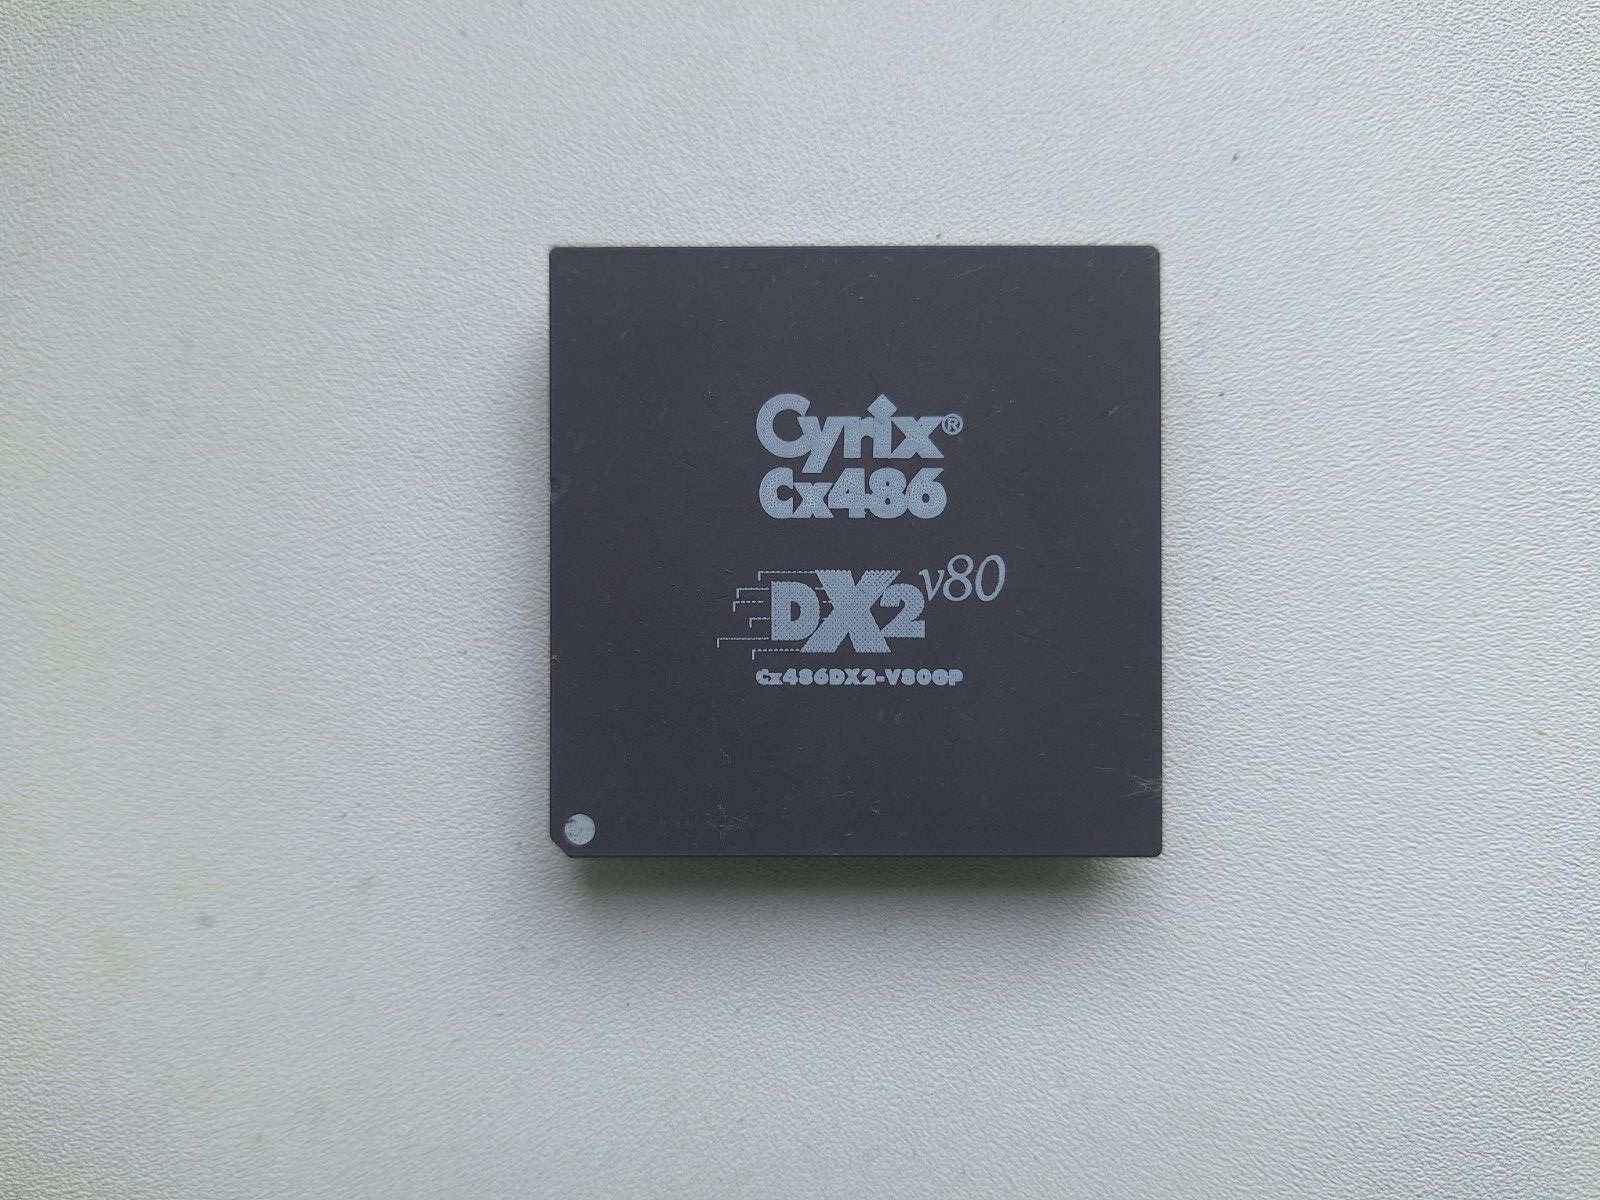 Cyrix Cx486DX2-V80GP 486DX2-80 vintage CPU GOLD